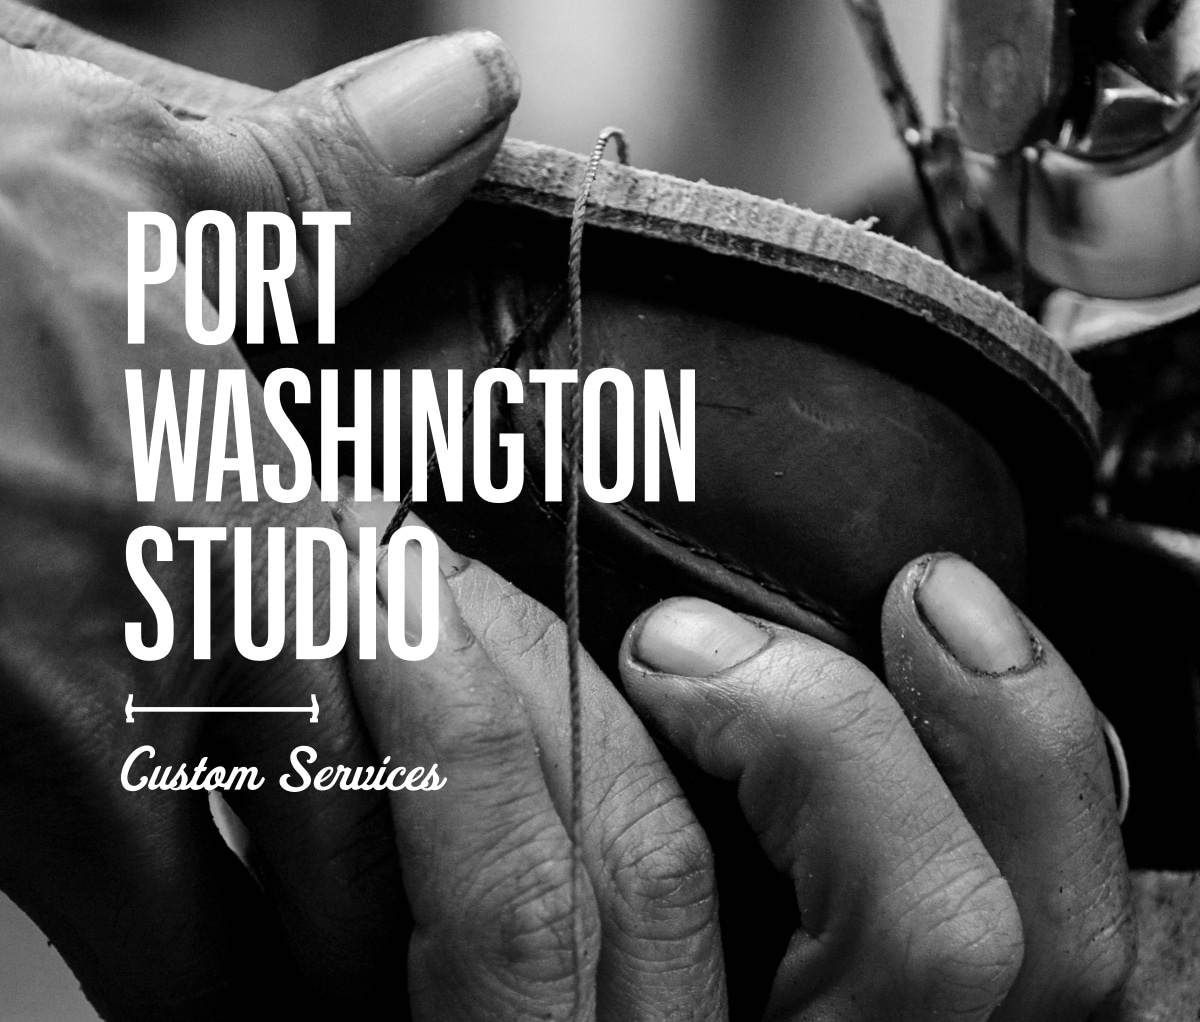 port washington studio custom services